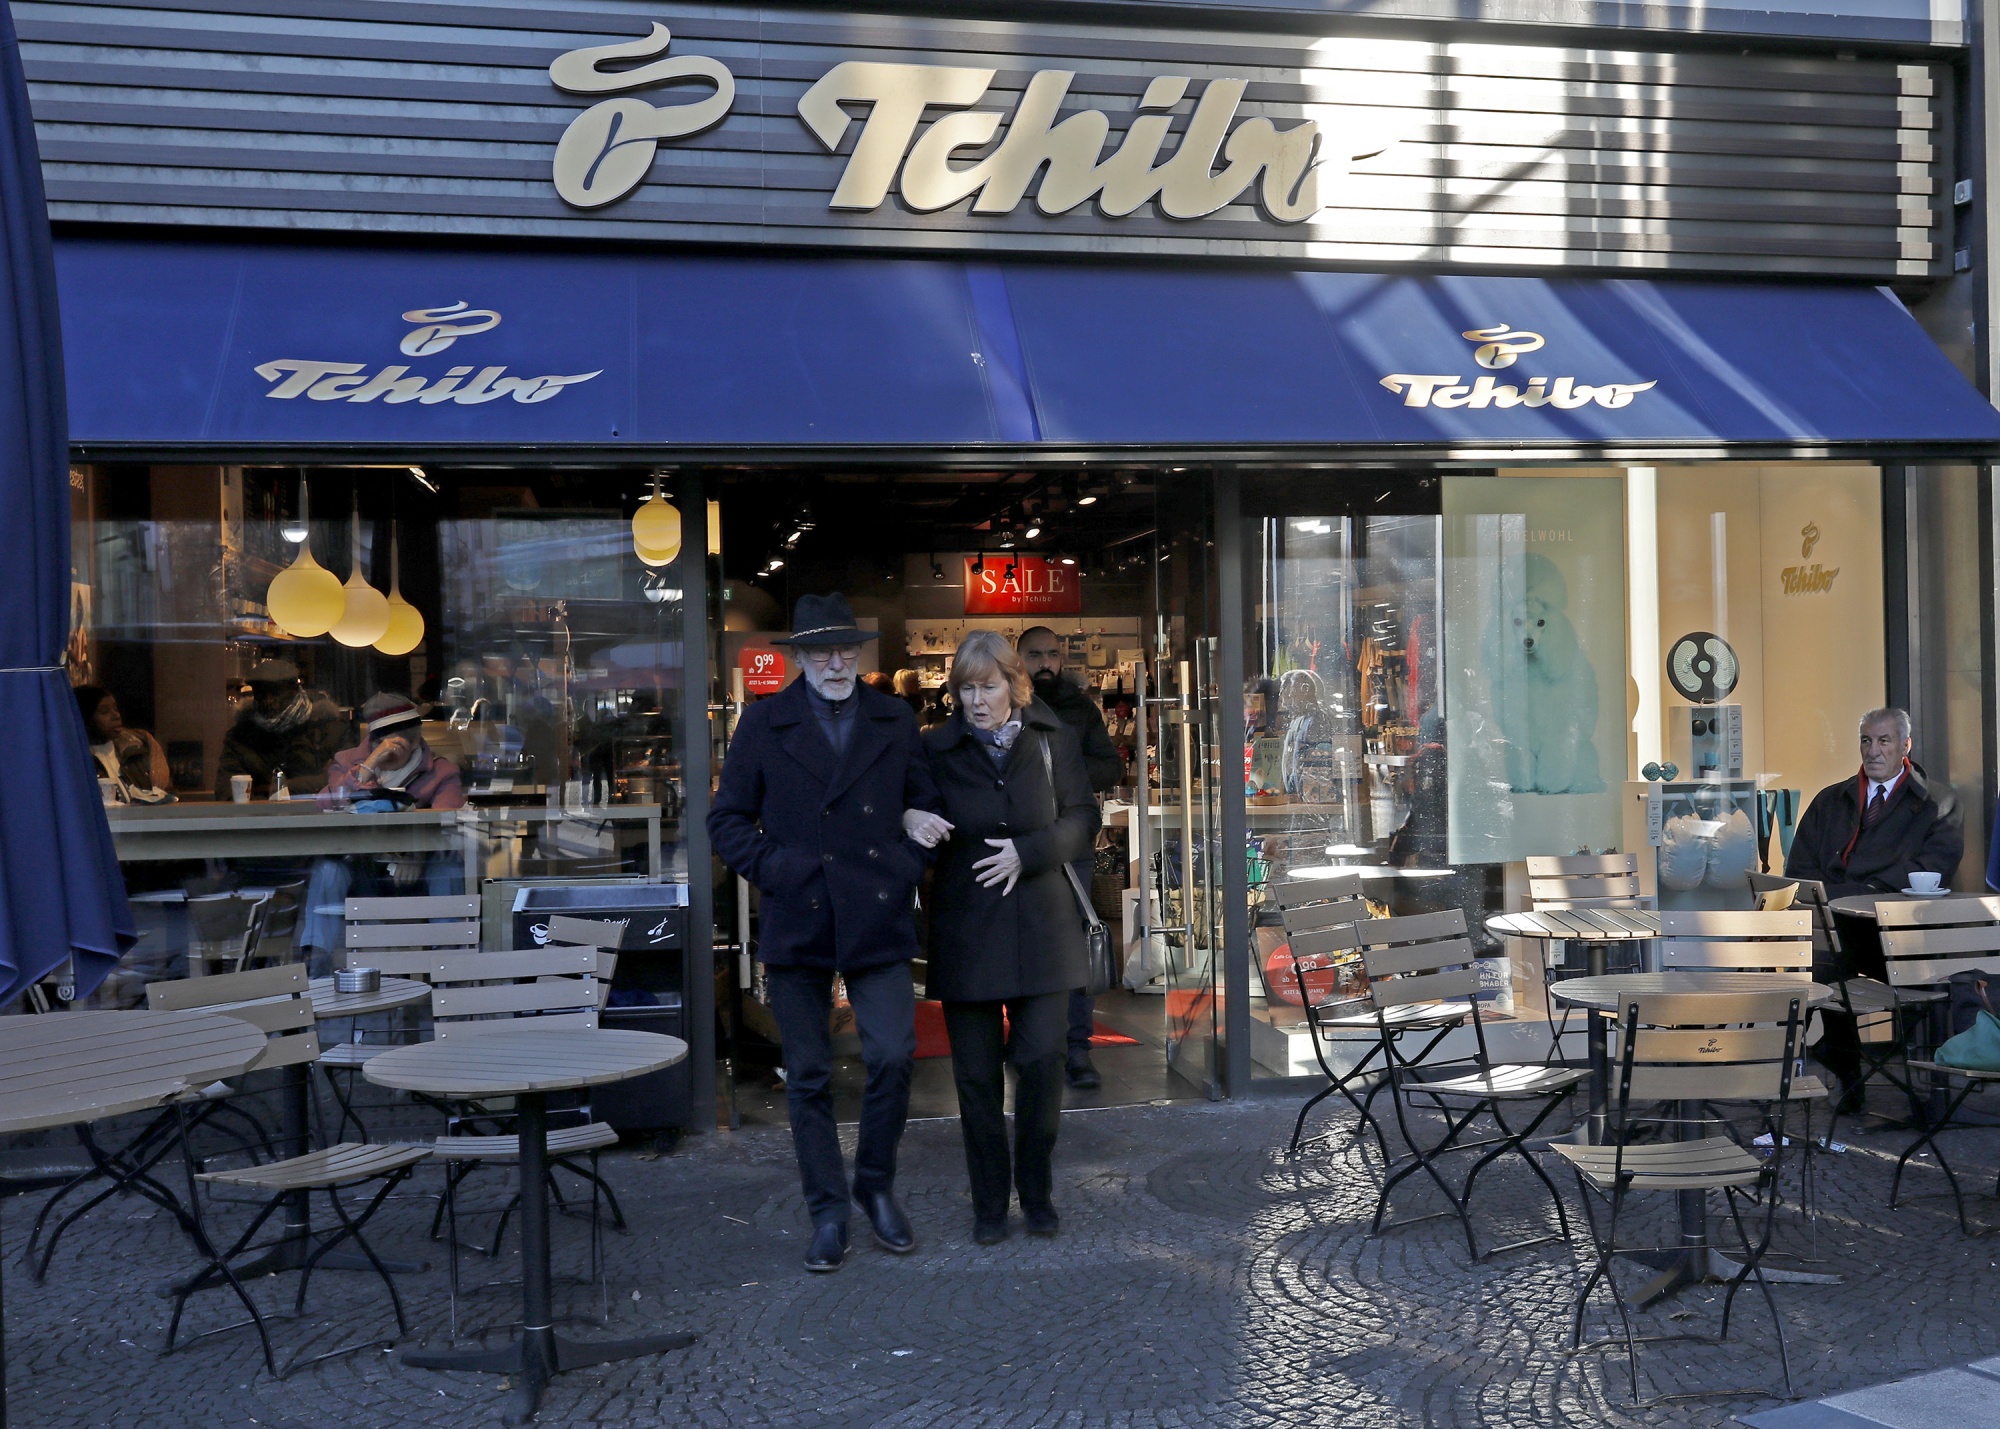 Pedestrians pass by a Tchibo coffee shop&nbsp;in Berlin.